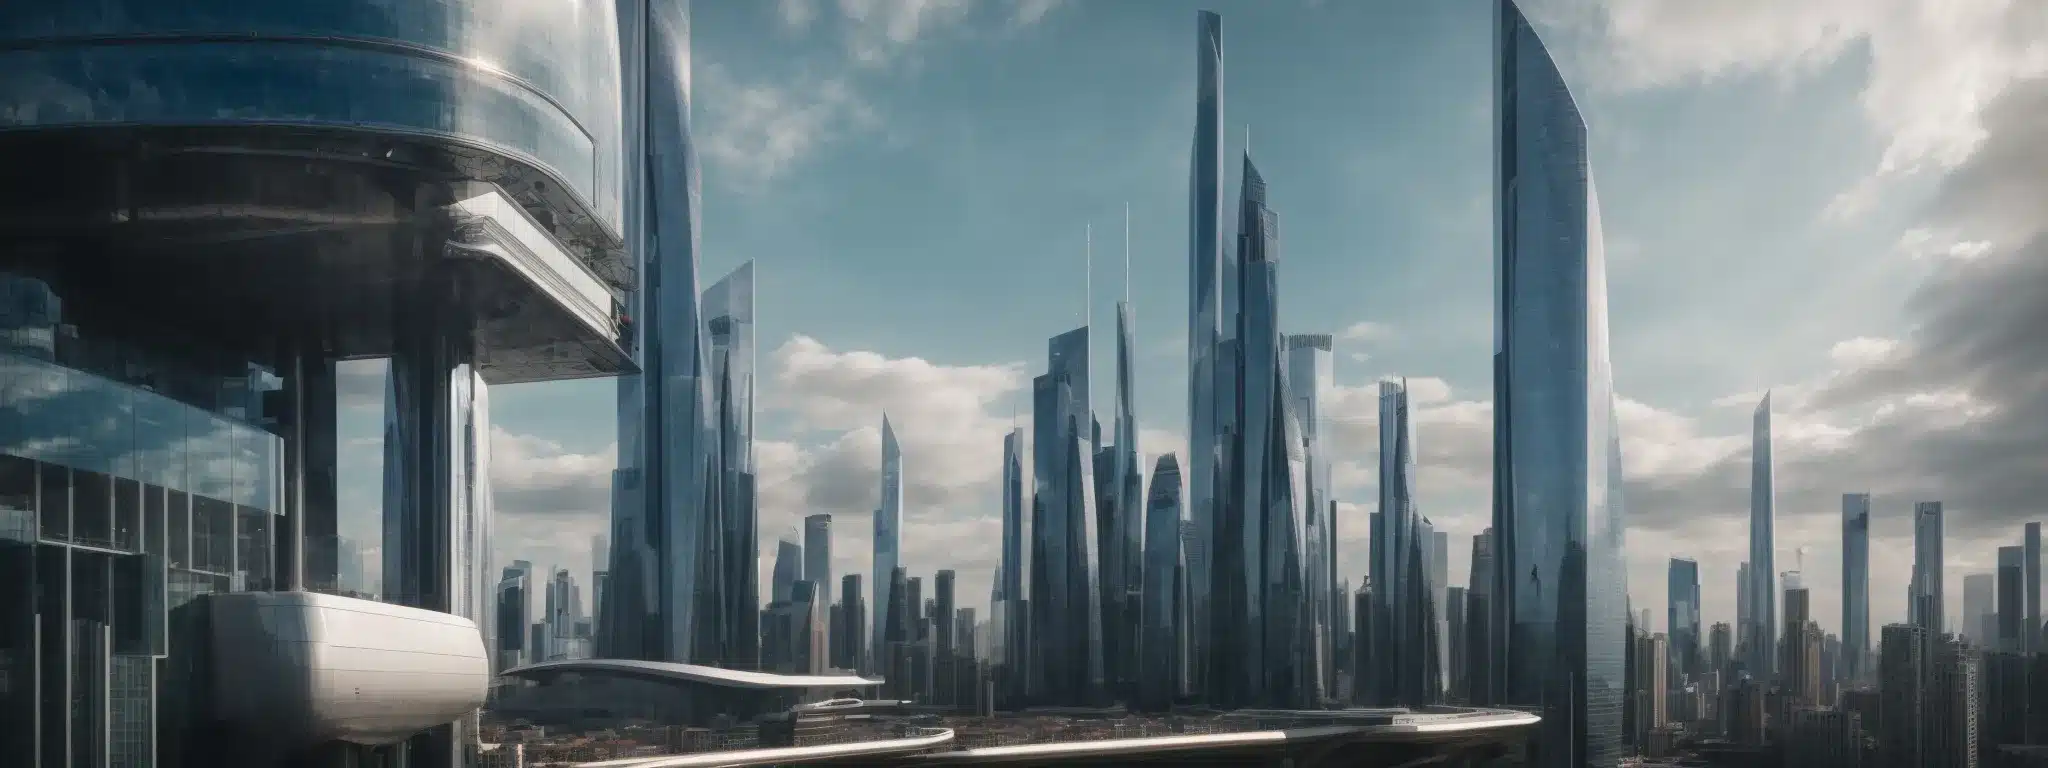 A Futuristic City Skyline, With A Prominent, Unique Skyscraper That Symbolizes Cutting-Edge Architectural Innovation.